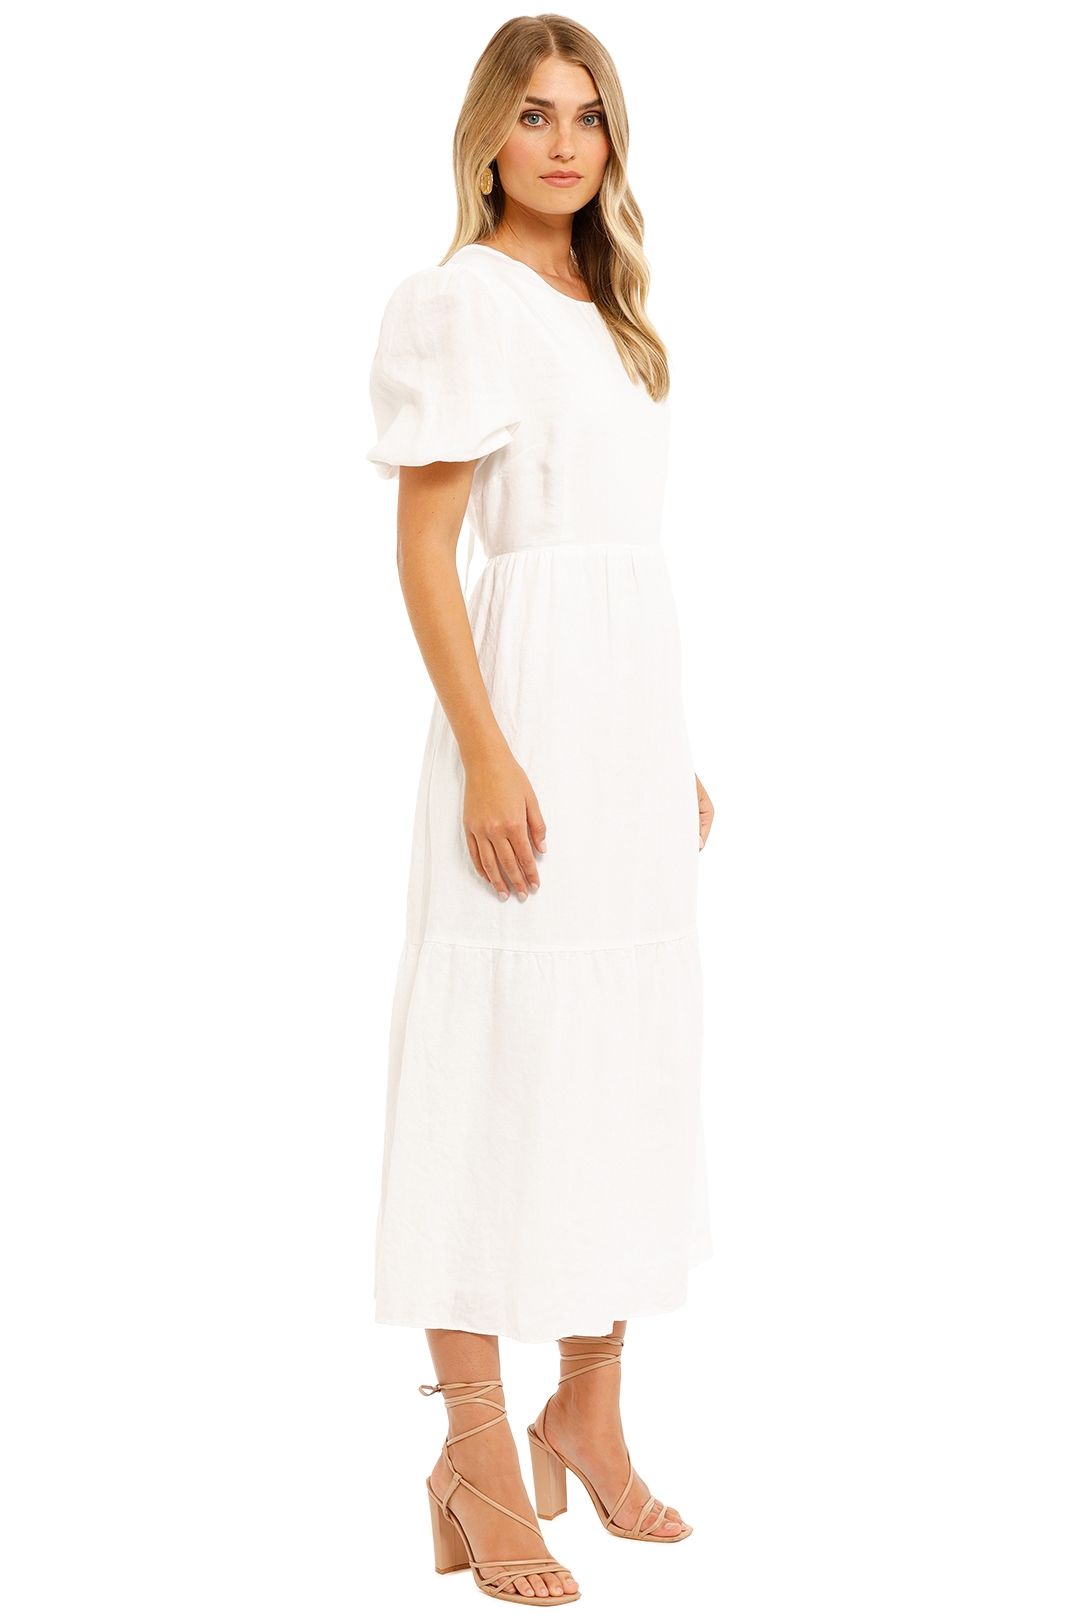 Jillian Boustred Katie Dress White Midi Length